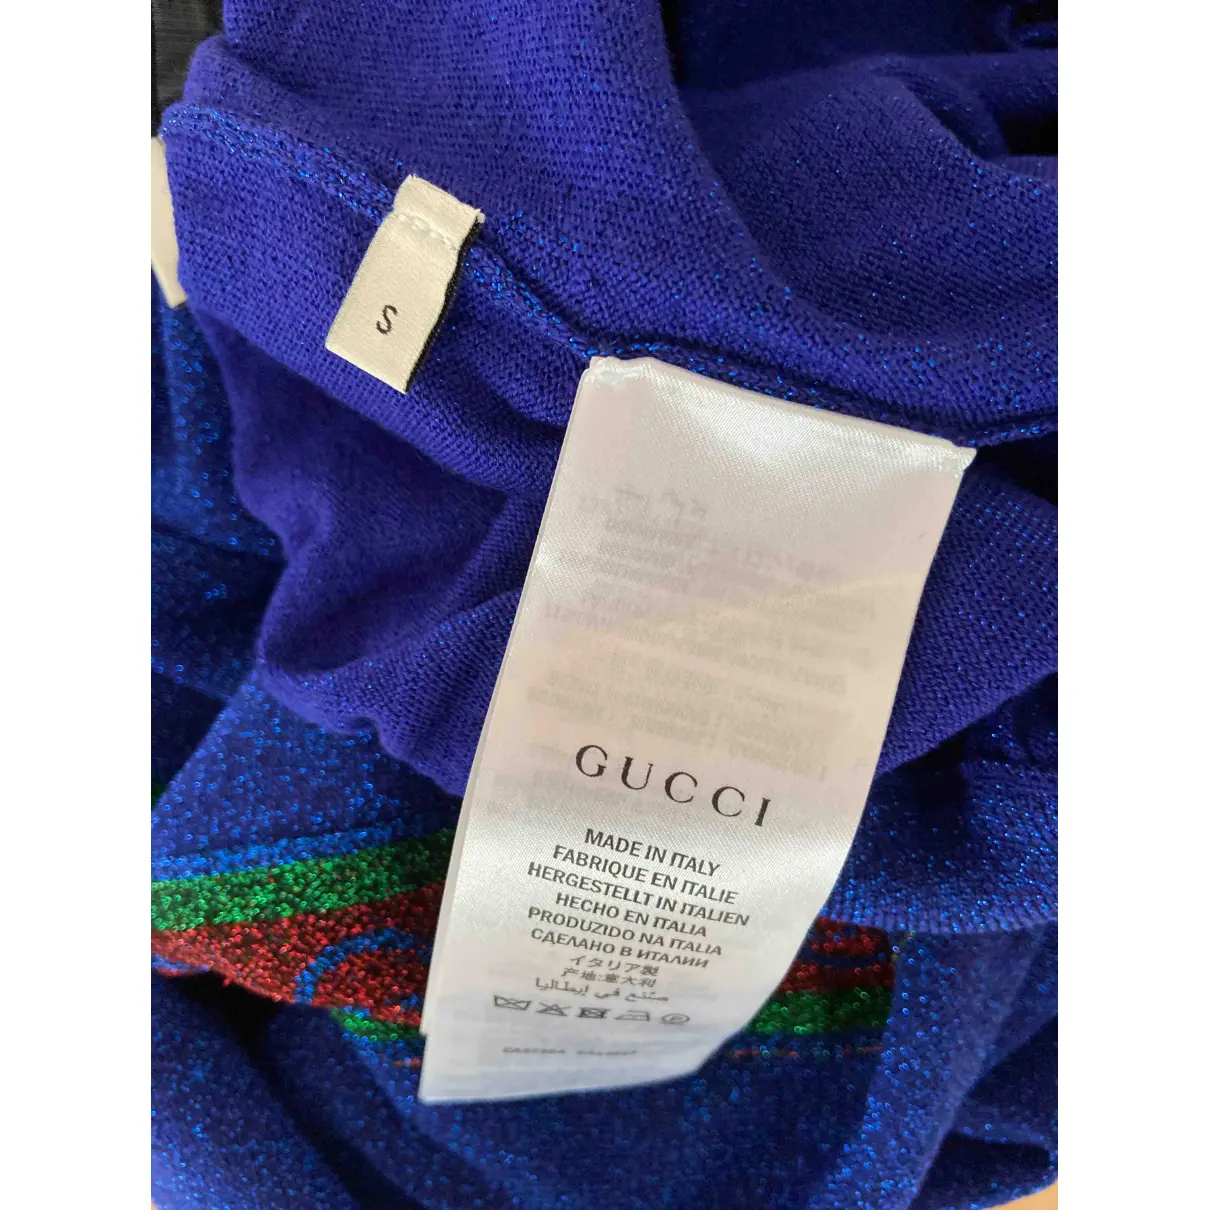 Wool harem Gucci